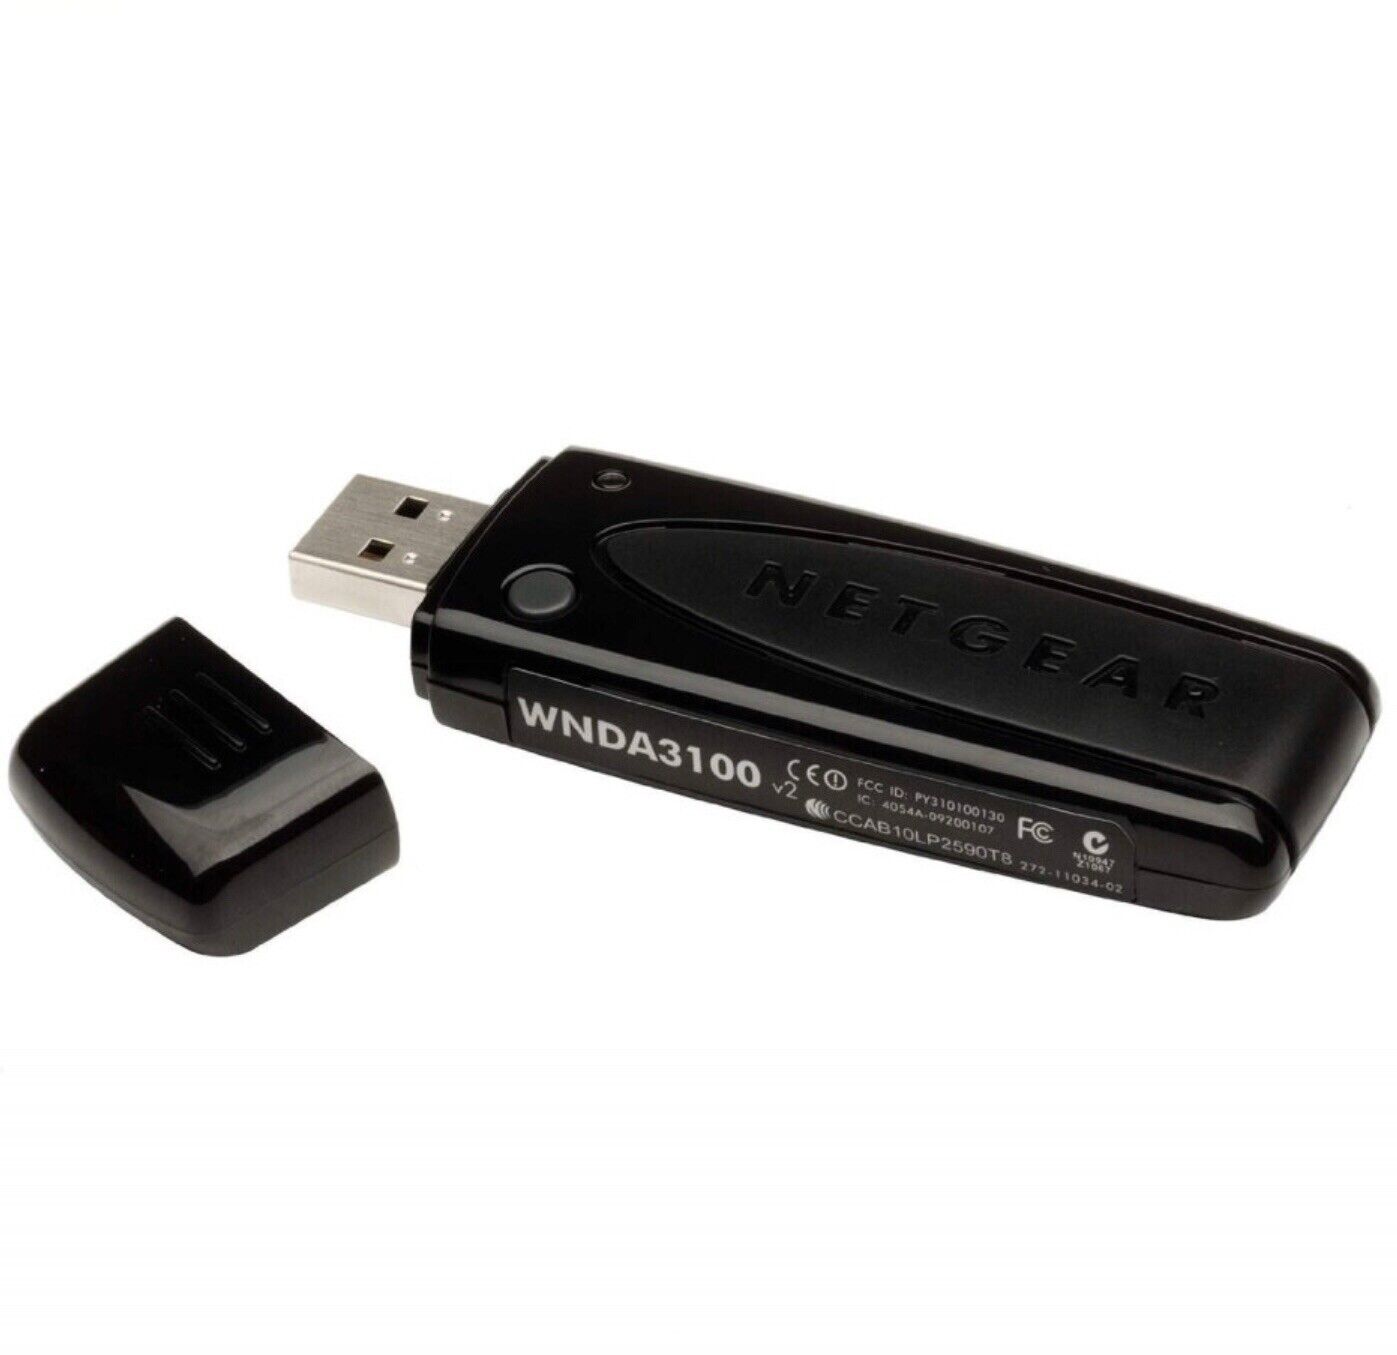 Netgear WNDA3100 V2 2.4ghz 5Ghz USB 300Mbps Wireless N USB Adapter W/Cable & CD